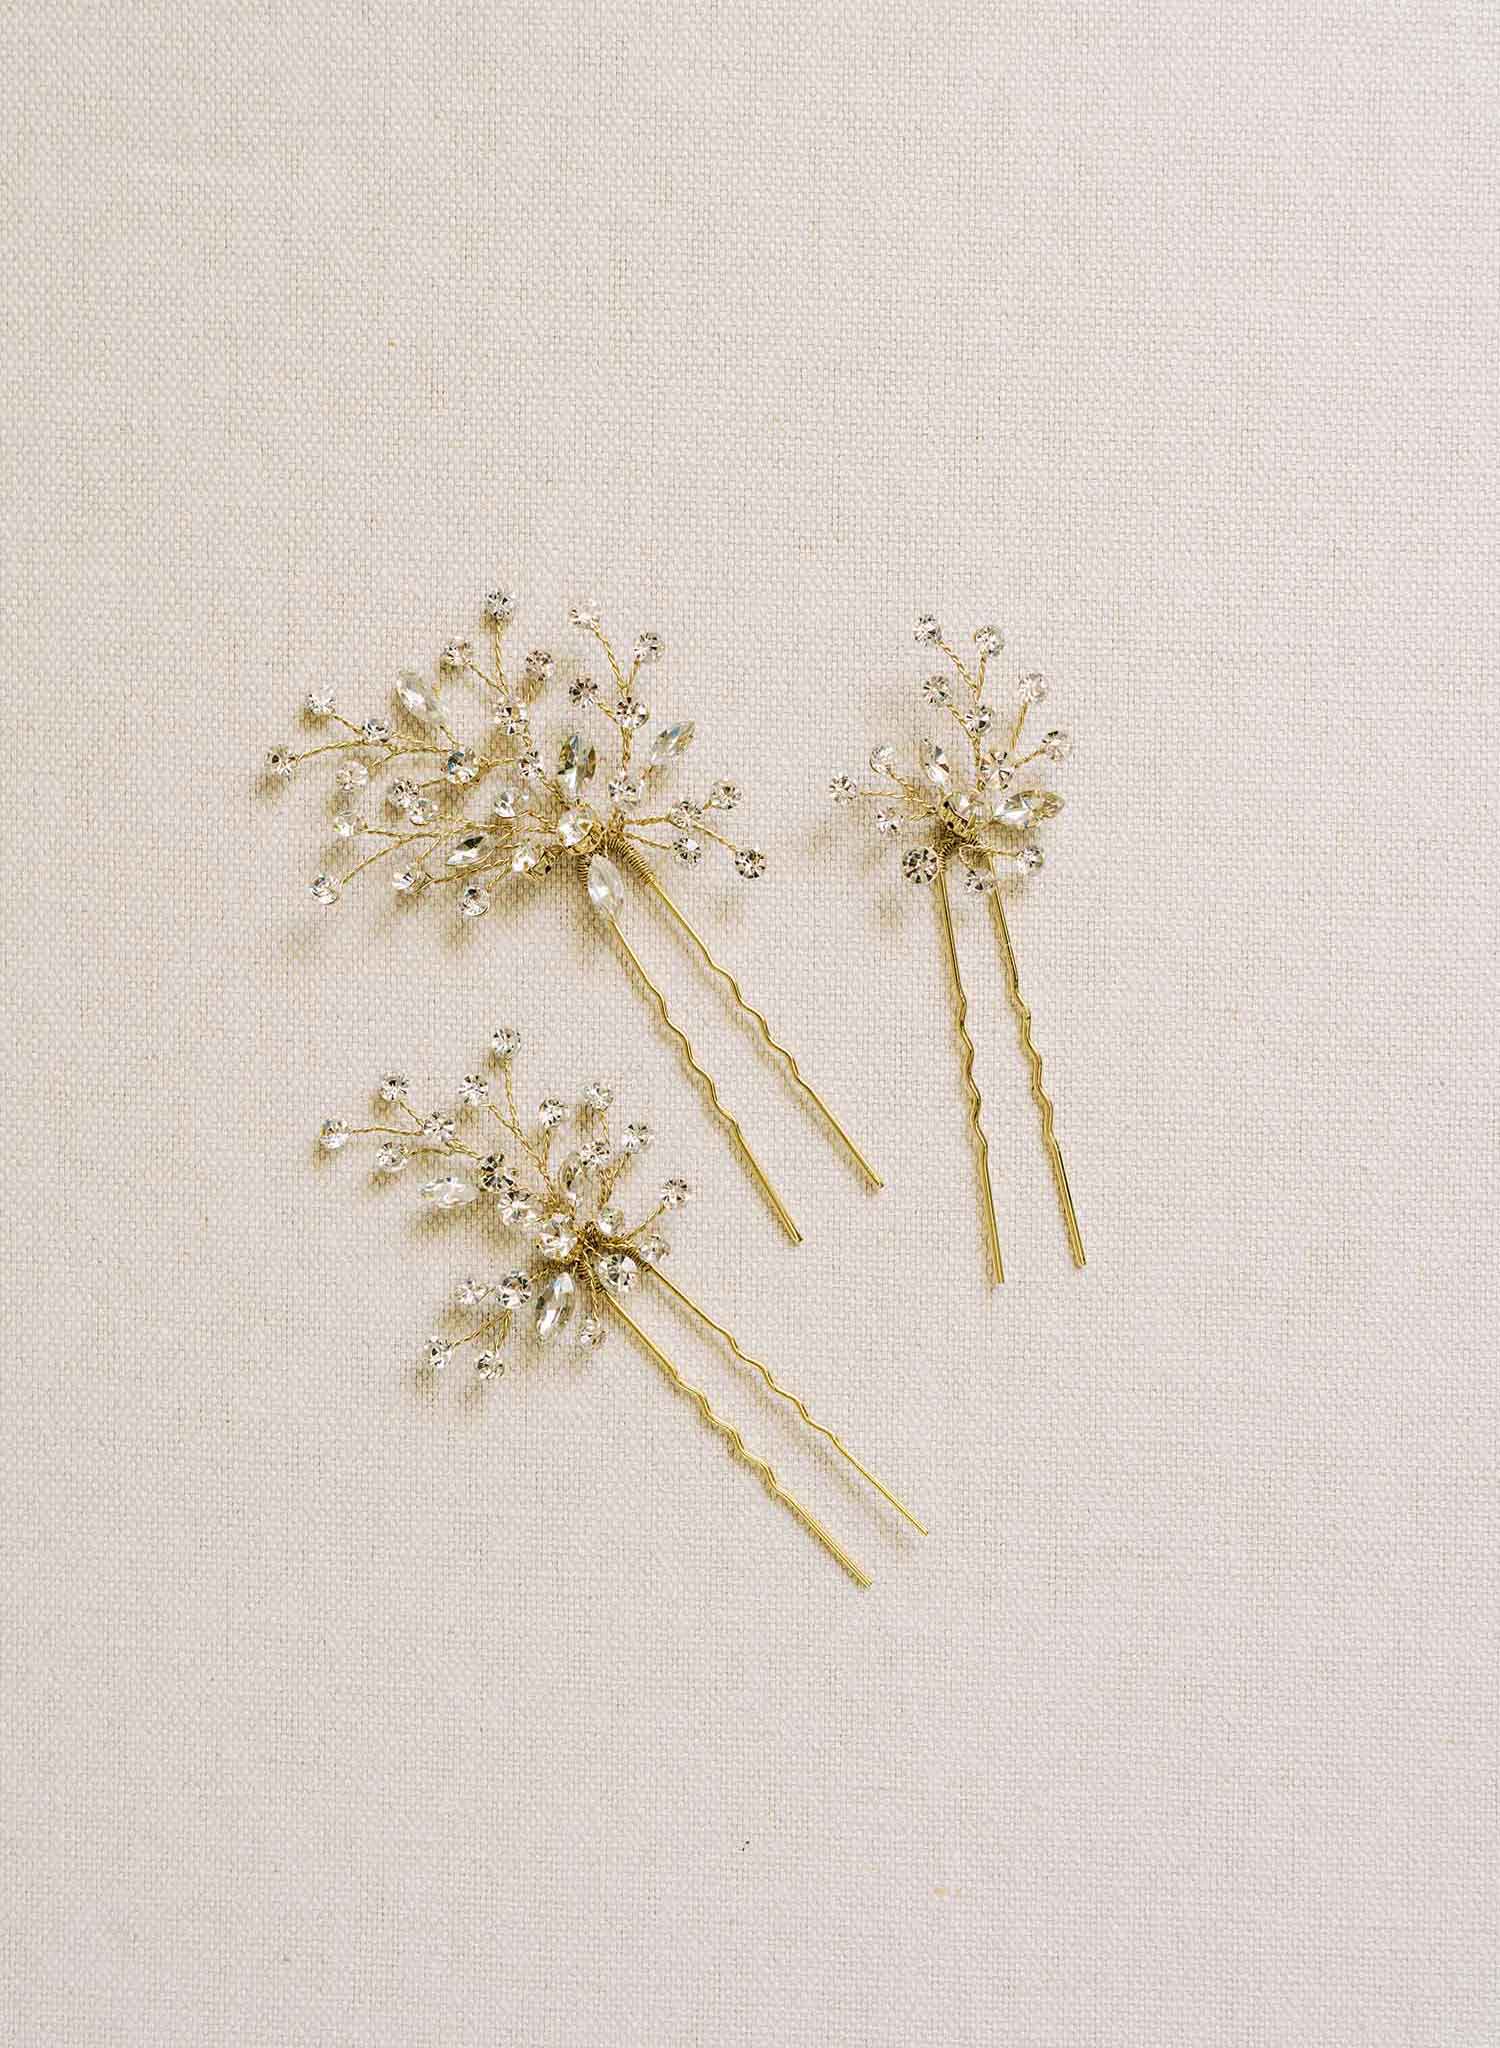 Rhinestone flourish bobby pin set of 3 - Style #2113